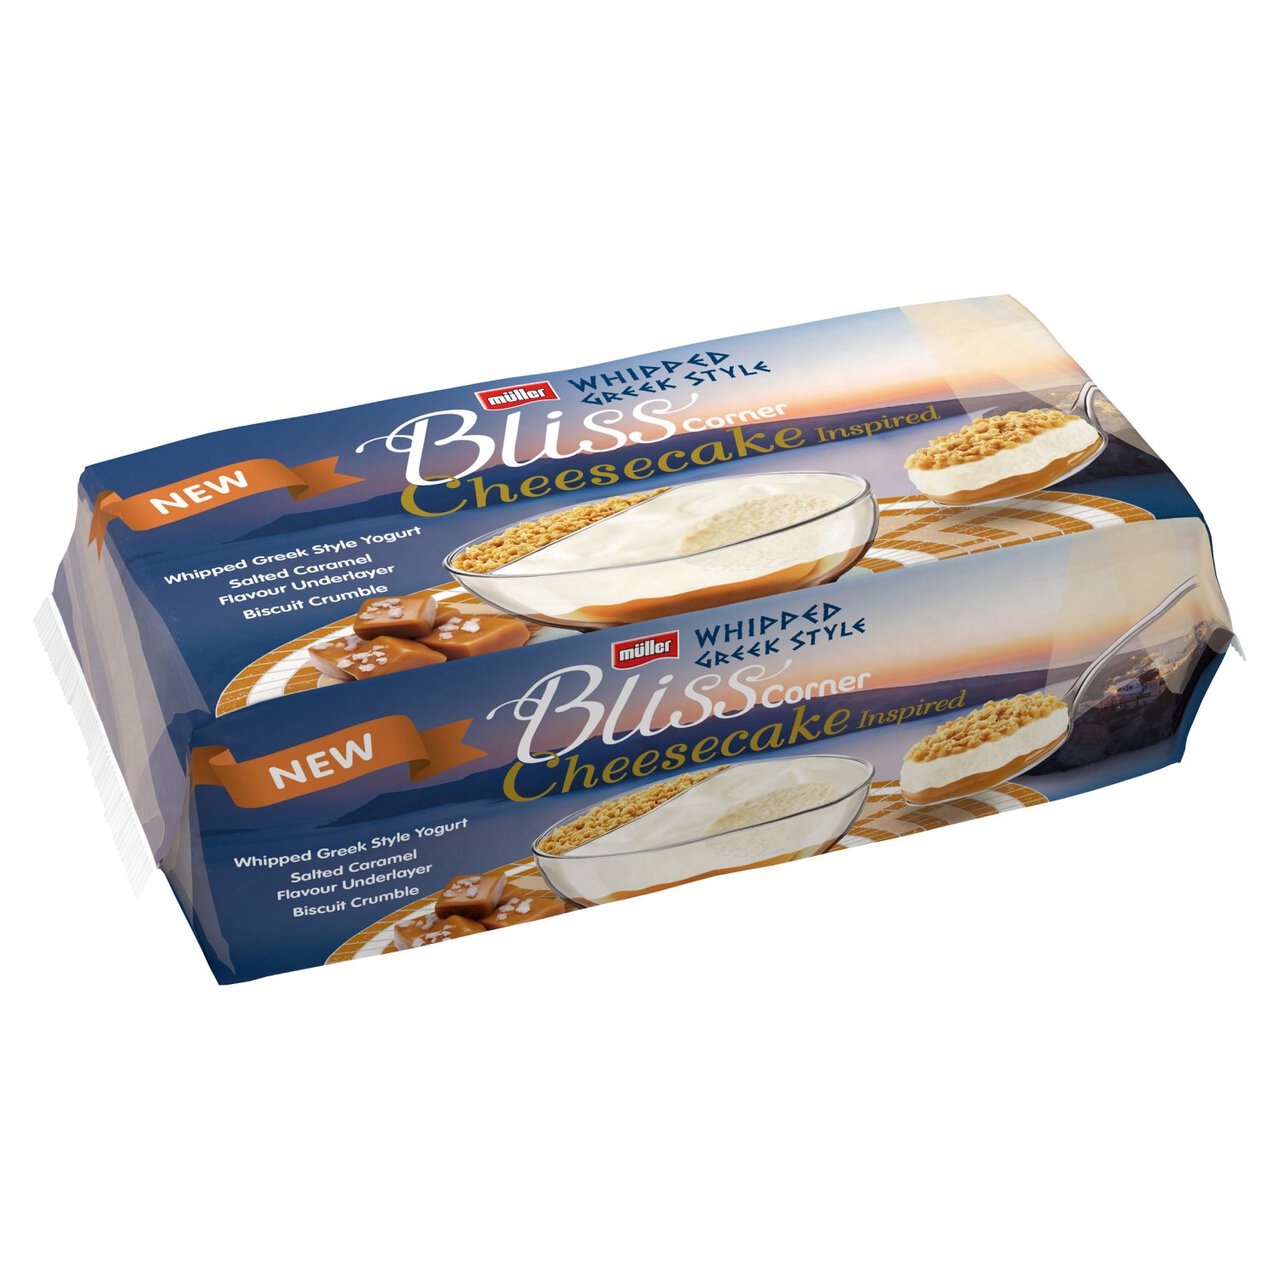 Muller Corner Bliss Cheesecake Whipped Greek Style Salted Caramel Yogurt 4 x 100g